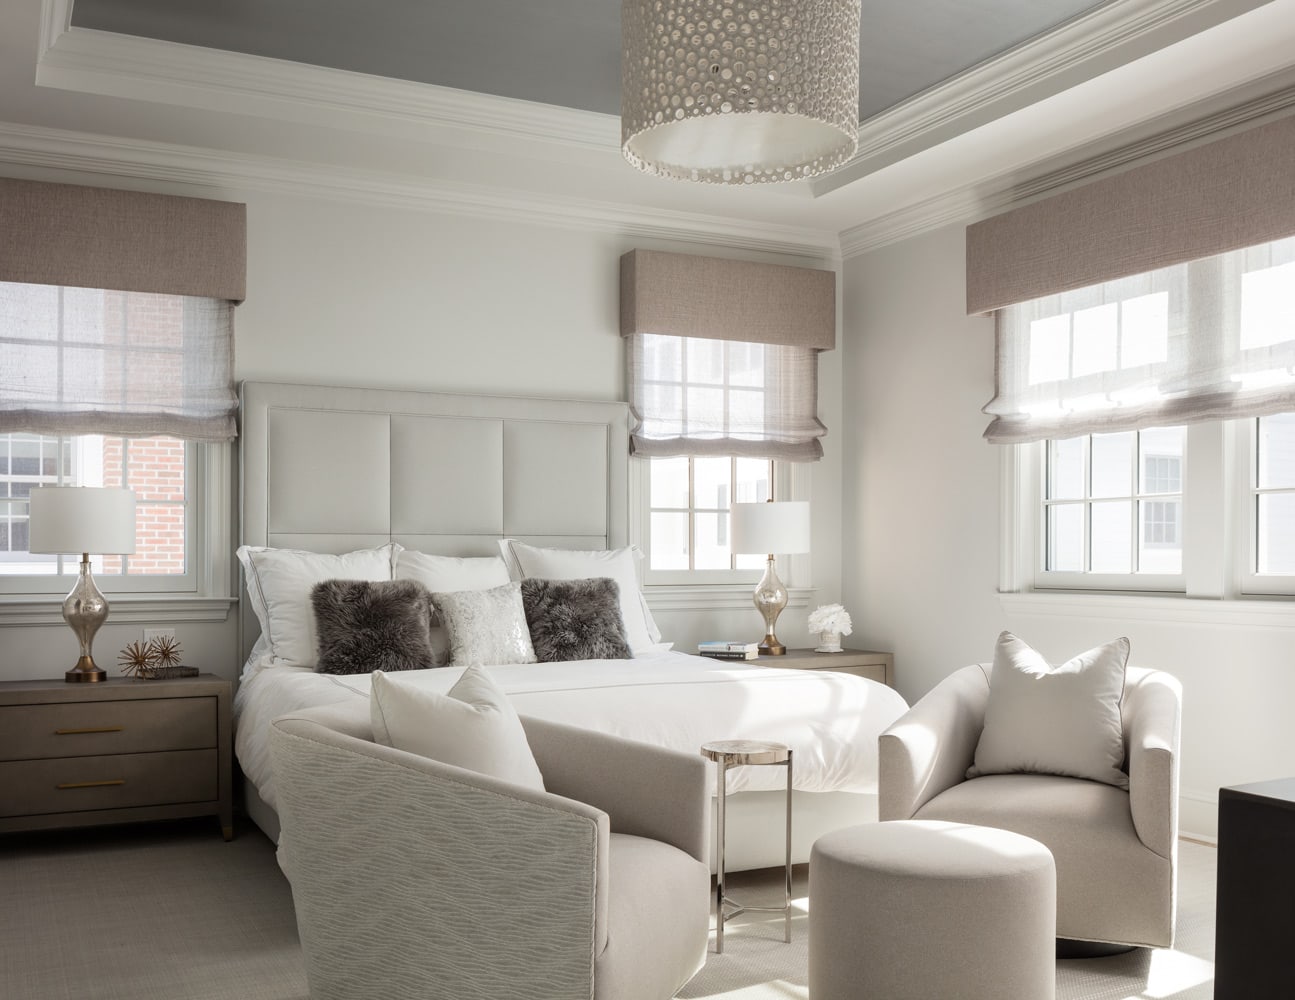 Roslyn village condo bedroom interior design by Annette Jaffe Interiors